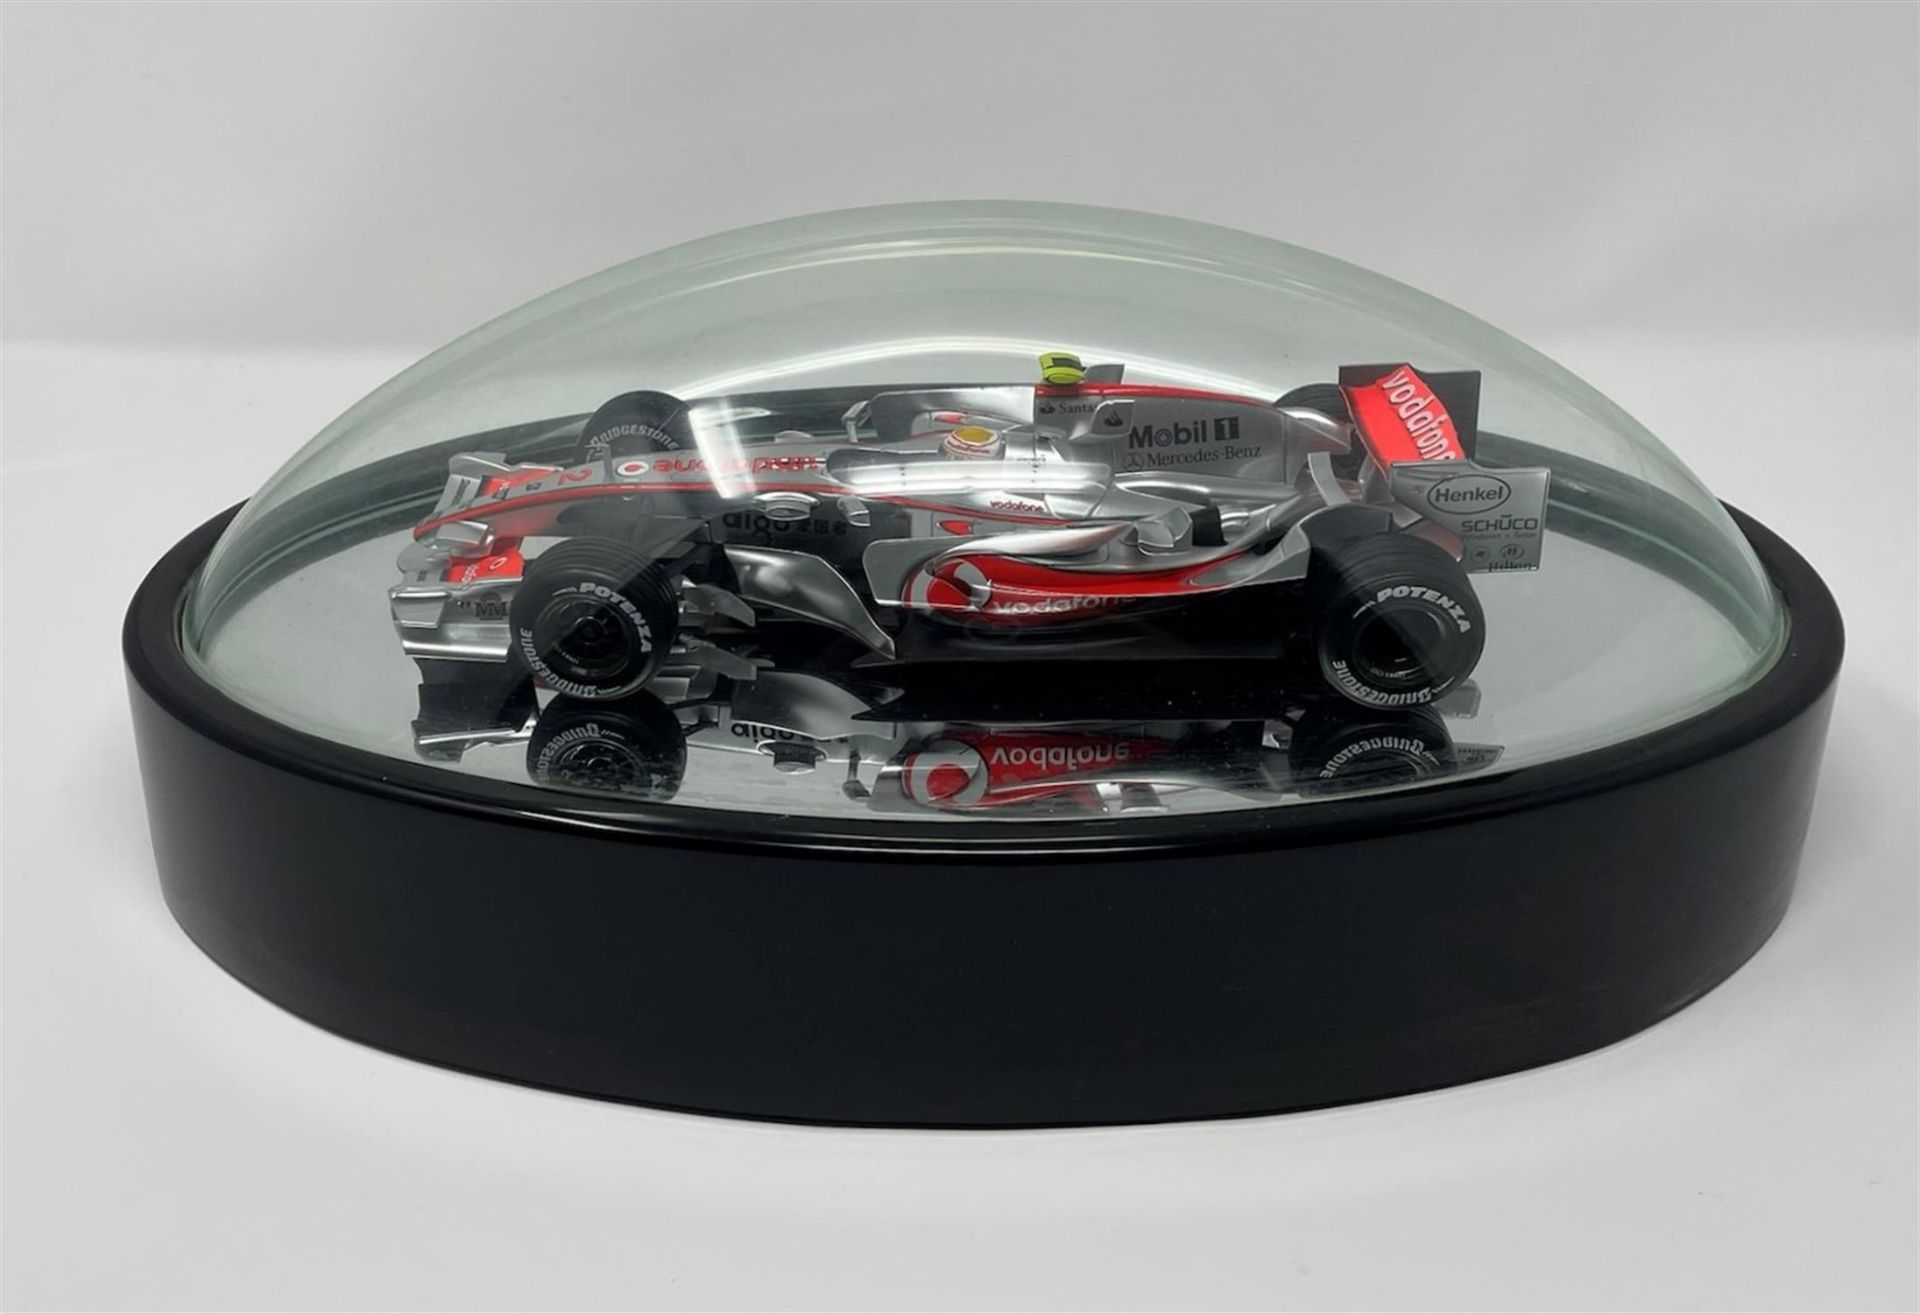 2007 Autosport Awards Hamilton-signed McLaren Table Centrepiece - Image 4 of 9